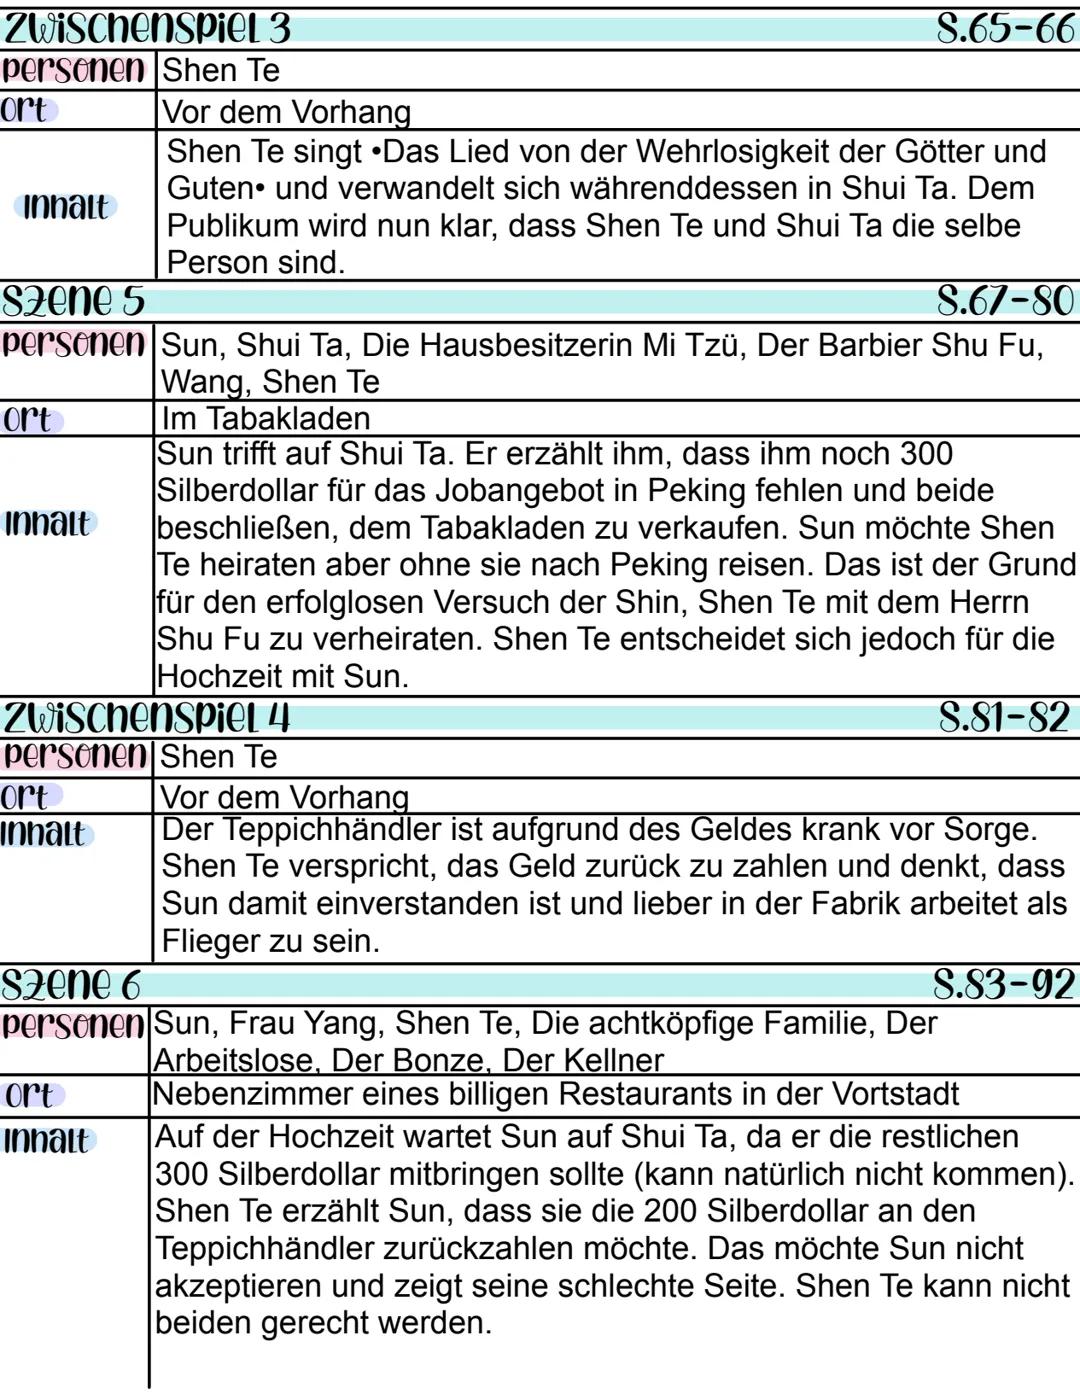 Bertolt Brecht
Der gute Mensch von Sezuan
edition suhrkamp
ᏚᏙ Figurenkonstellation
Wang
Wasserverkäufer
Shu Fu
Barbier
Die Besitzenden
←Gesp